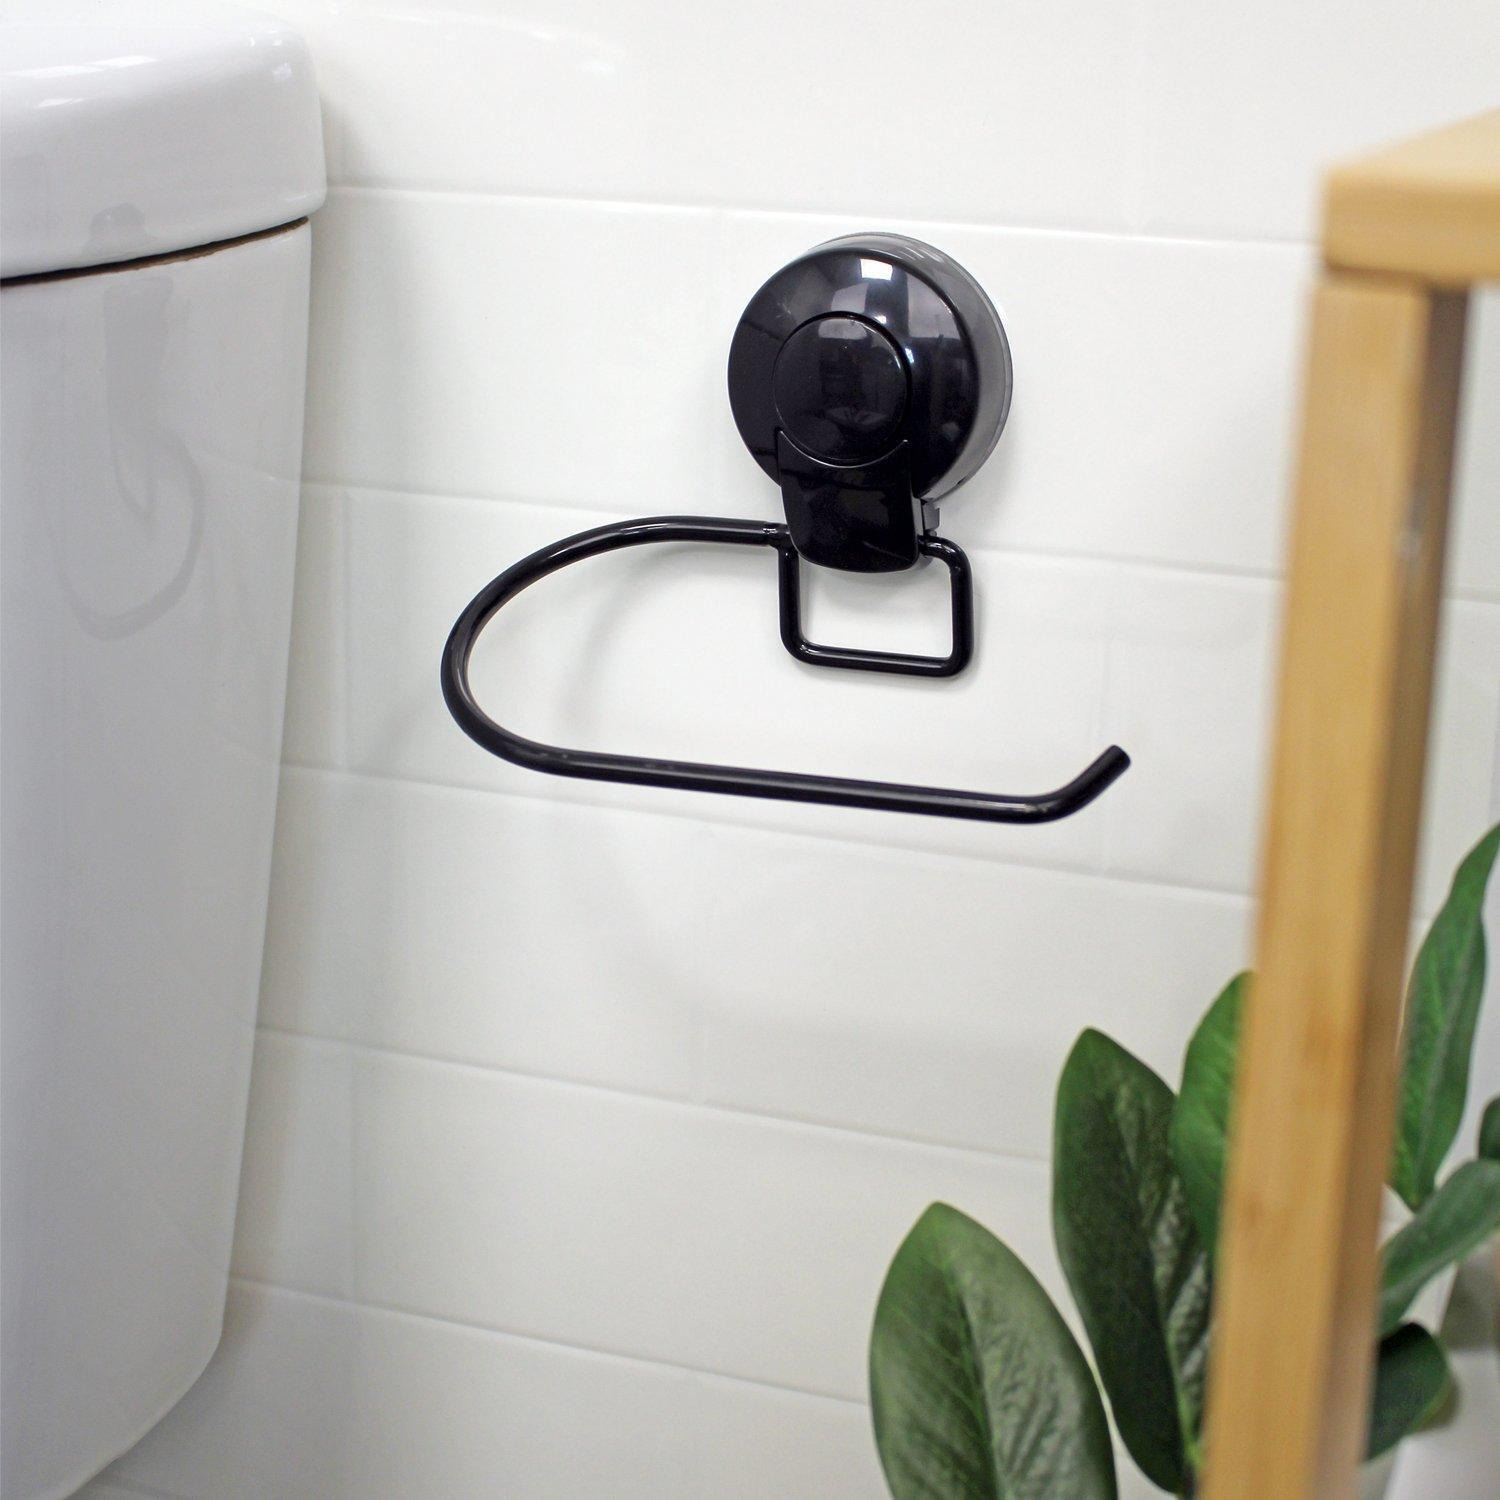 'Suctionloc' Black Toilet Roll Holder - image 1